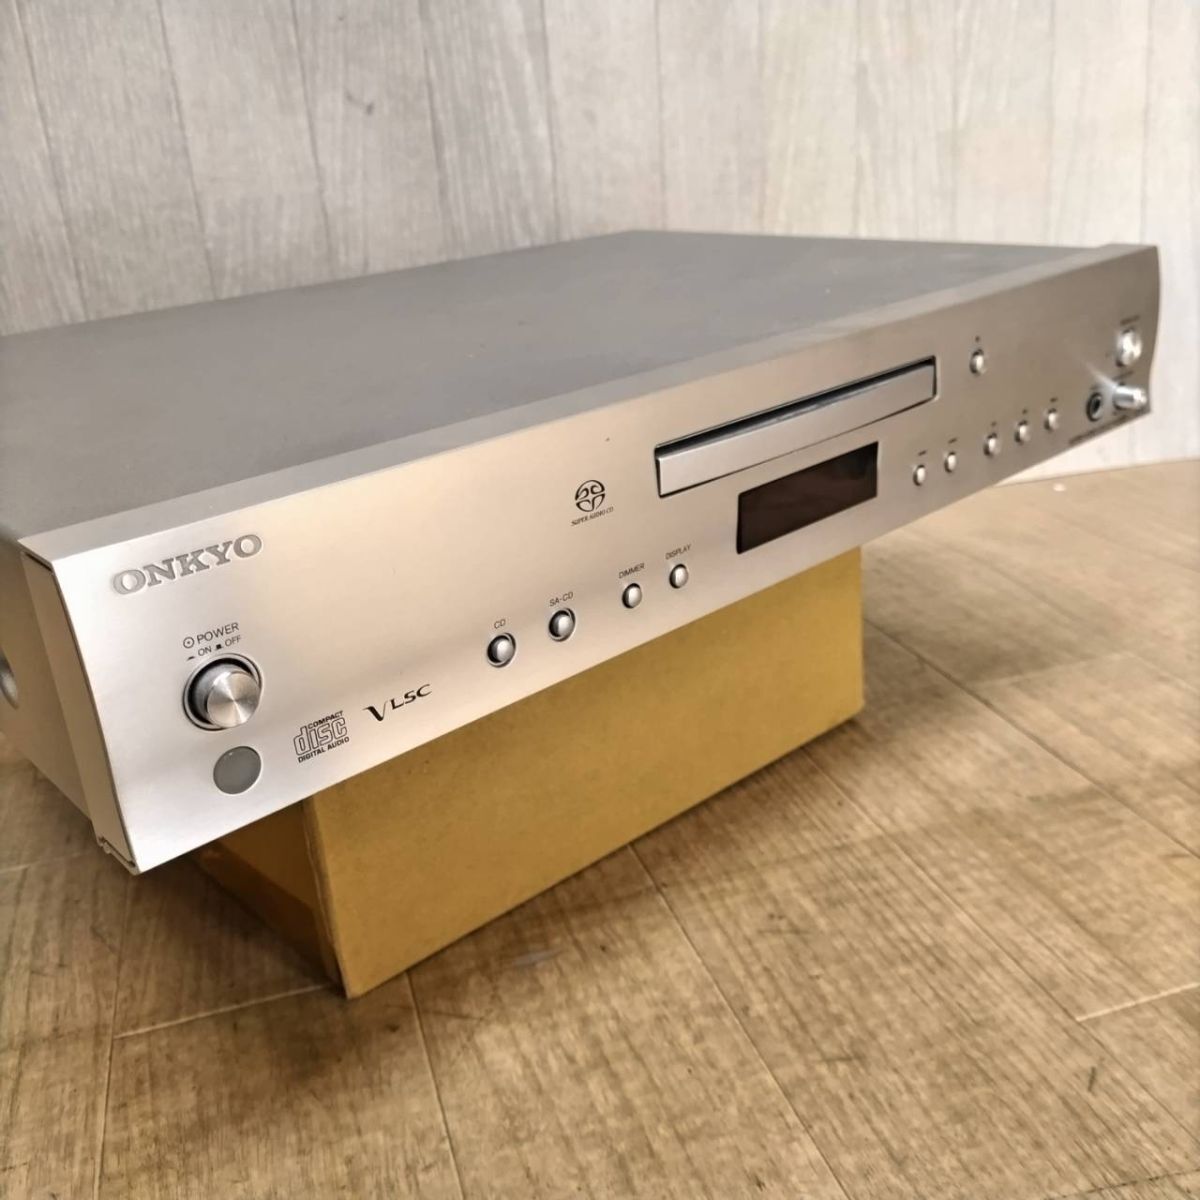 F627-SK10-859 ONKYO Onkyo C-S5VL super audio CD player silver electrification has confirmed ⑥